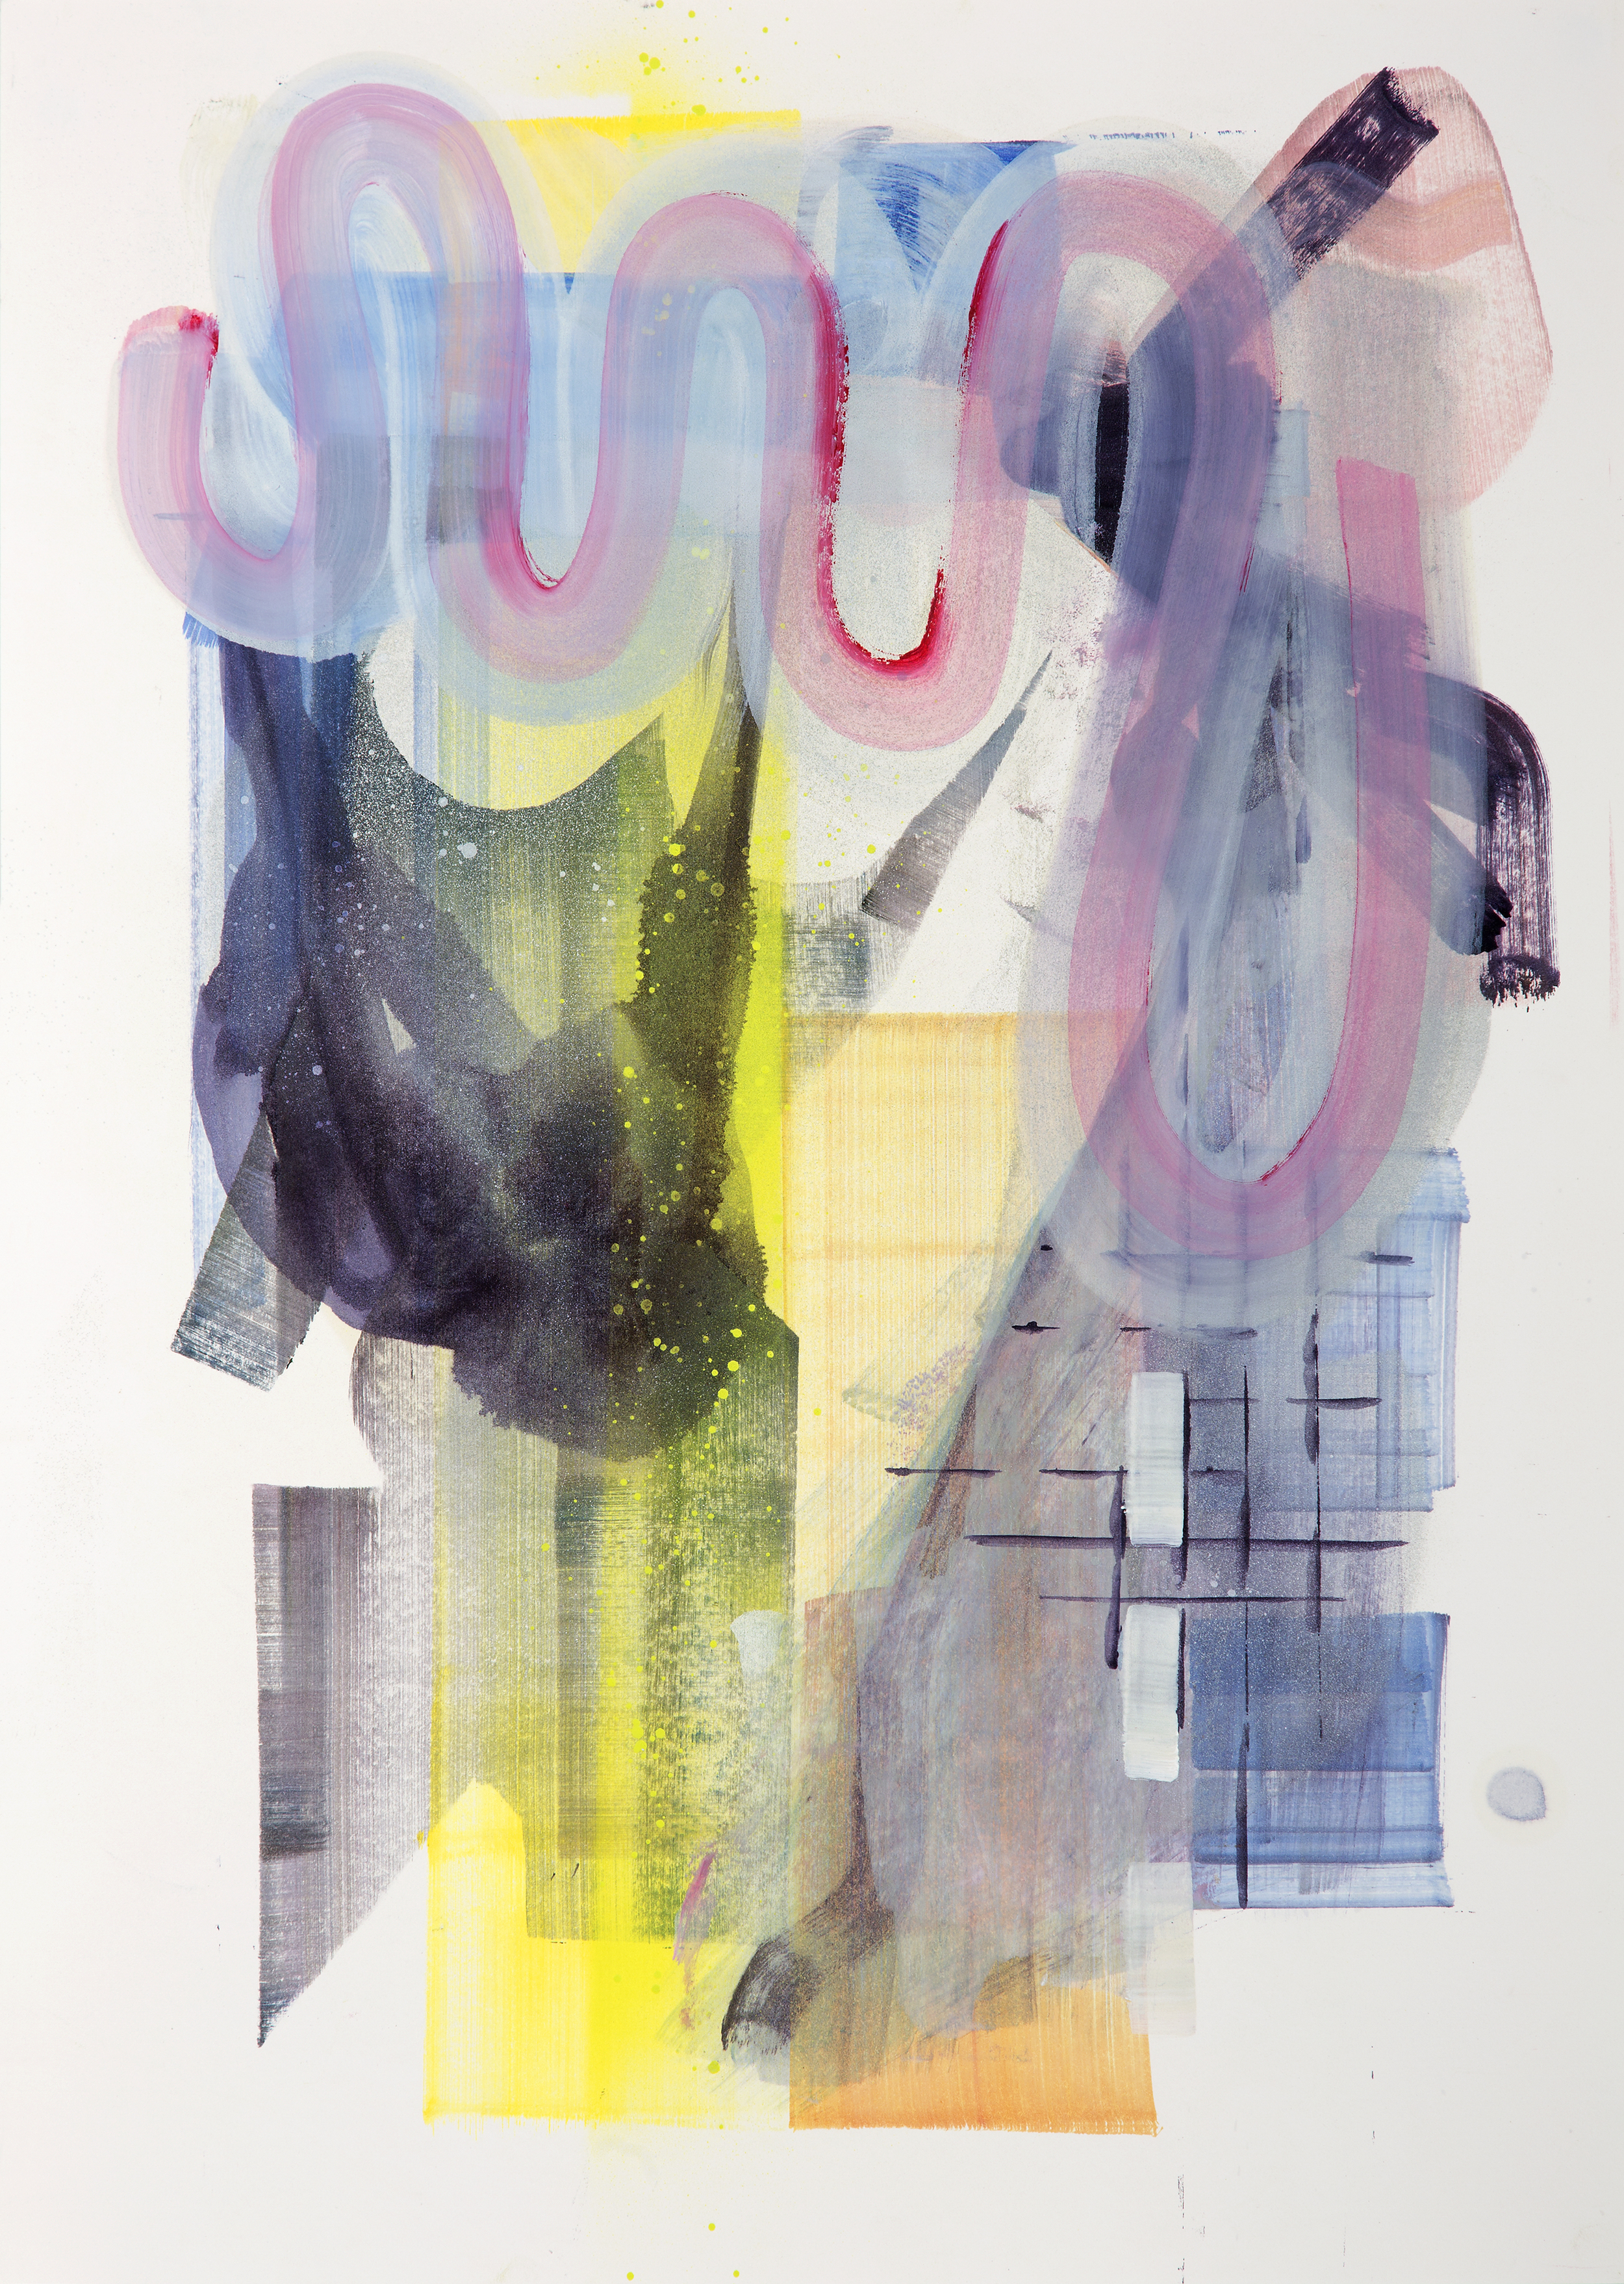  Interface, 2014, oil on paper, 59cm x 42cm 